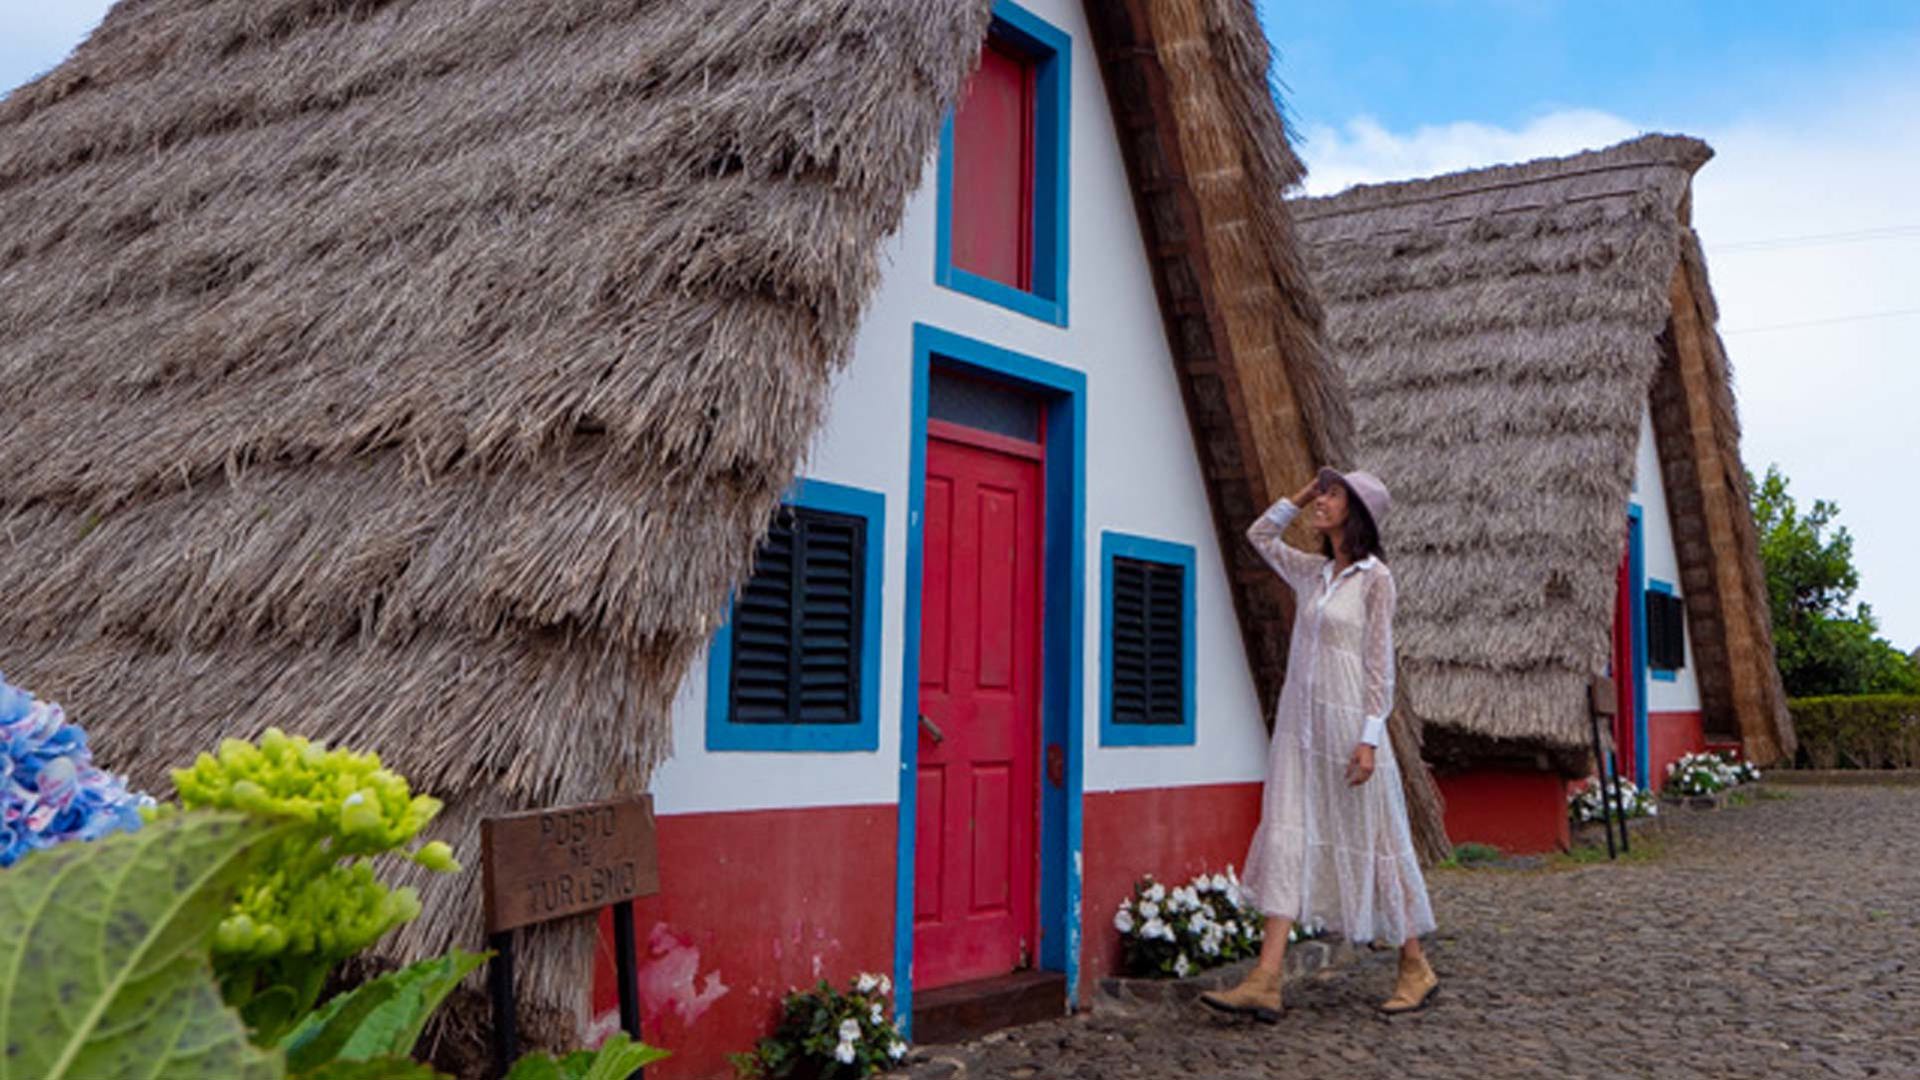 Casa de Santana', a traditional type of house in Madeira Islands